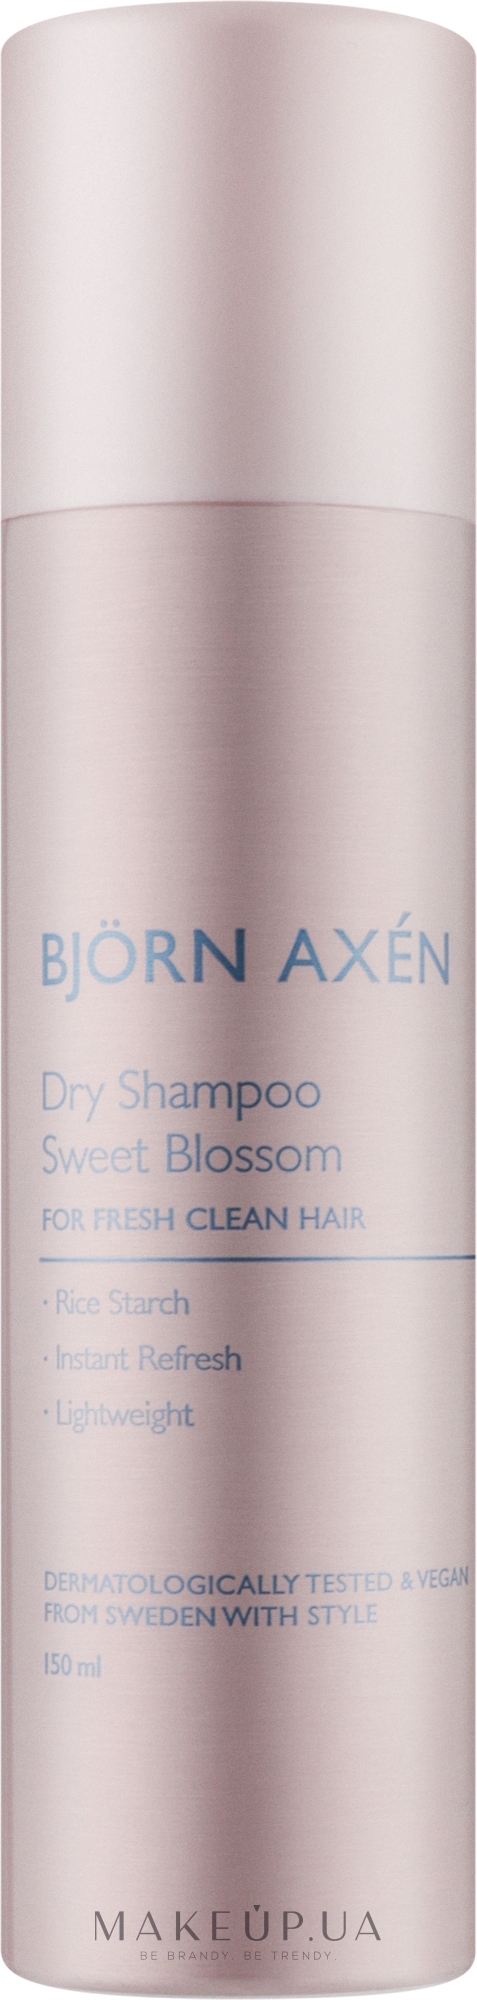 Сухой шампунь с цветочным ароматом - BjOrn AxEn Dry Shampoo Sweet Blossom — фото 150ml